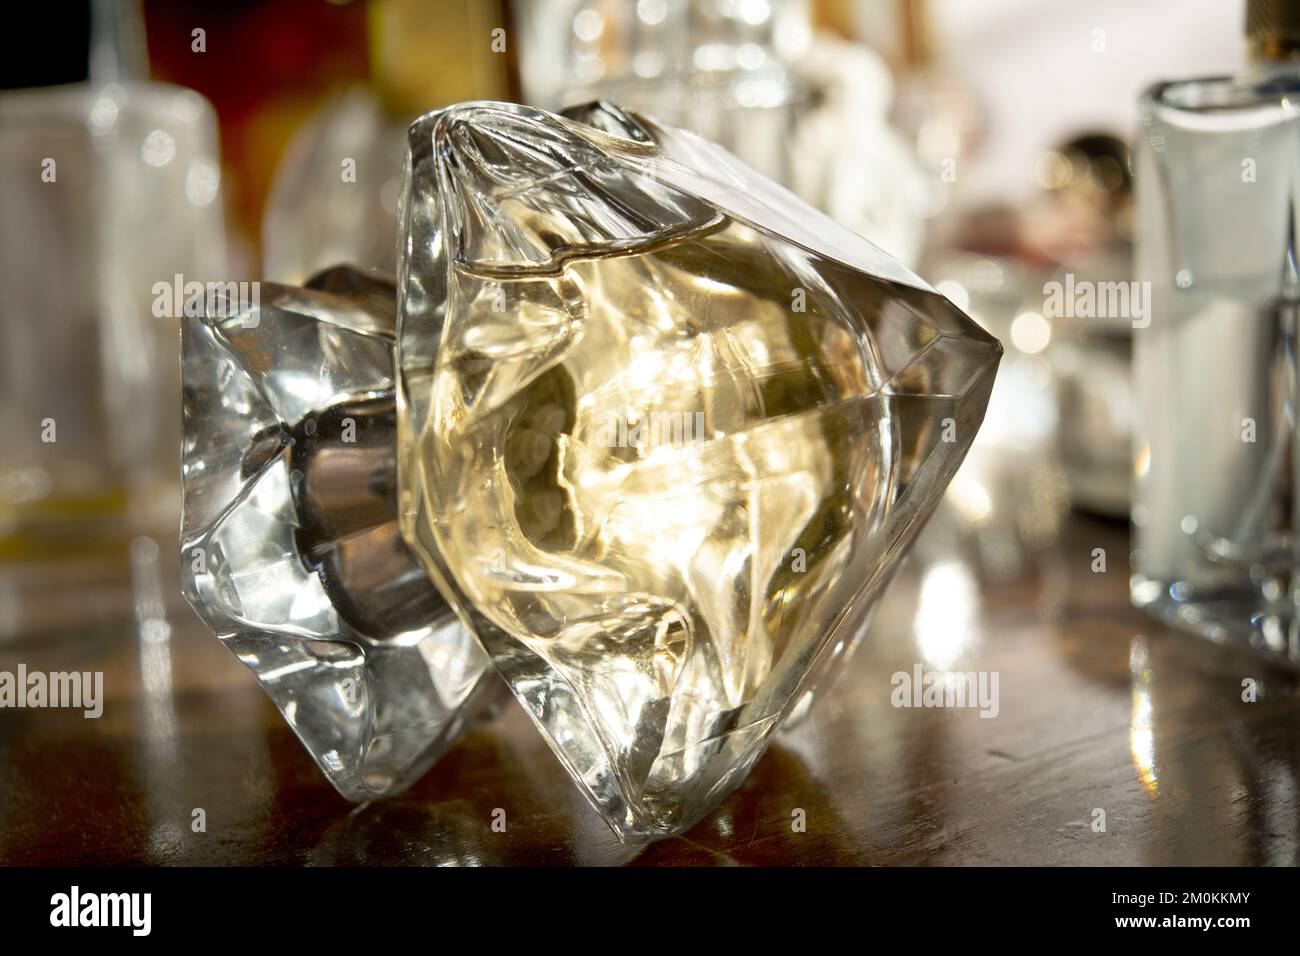 3D Shiny Diamond Crystals Portrait of Coco Perfume Bottle